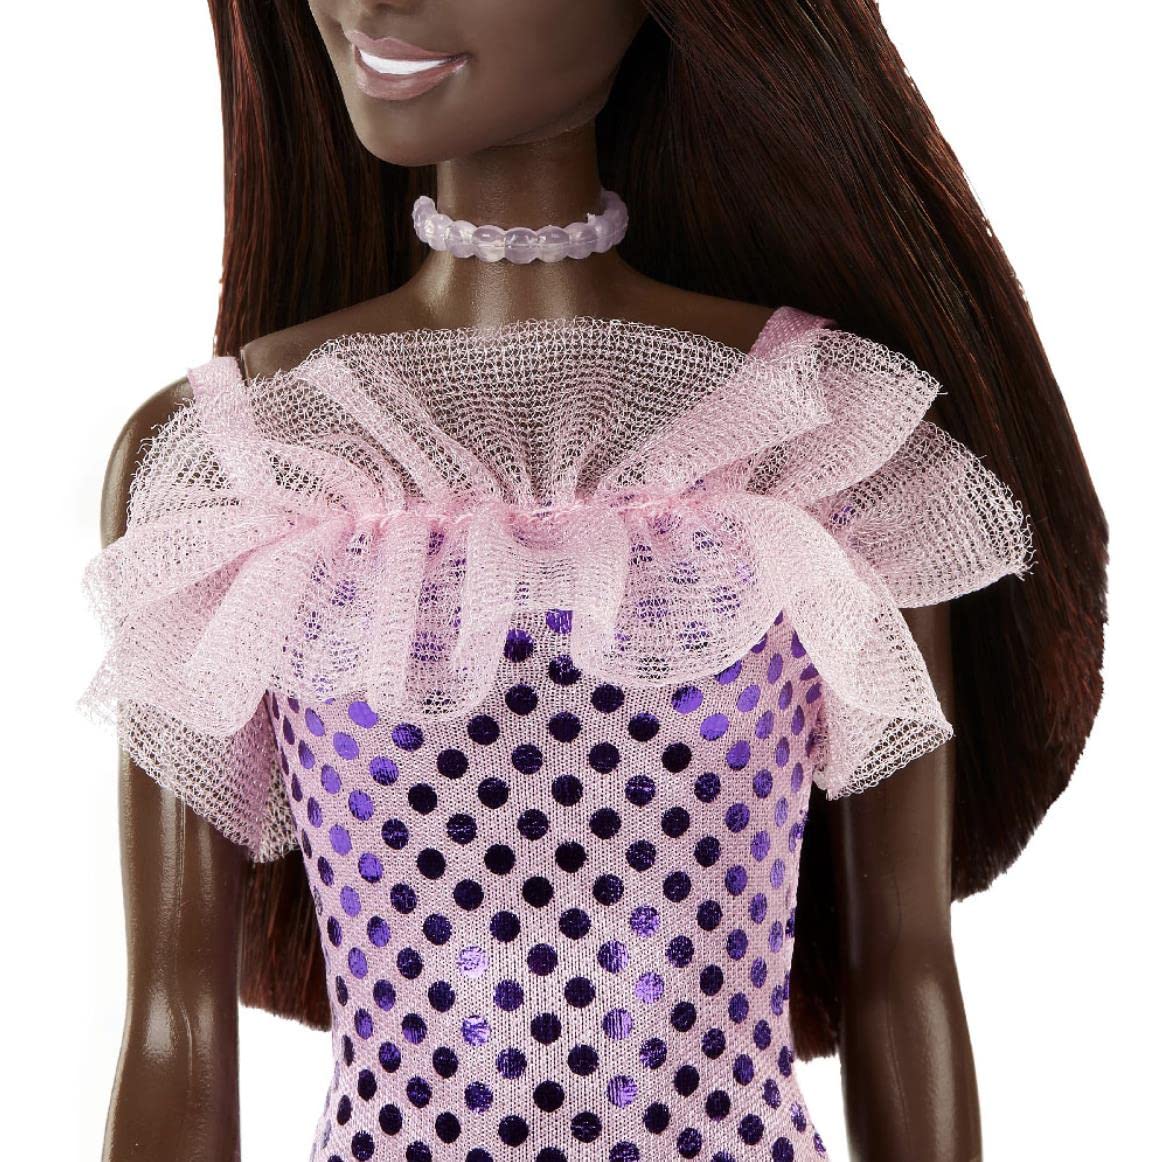 Barbie Brown Hair Doll Wearing Pink Metallic Dress for Kids Ages 3+